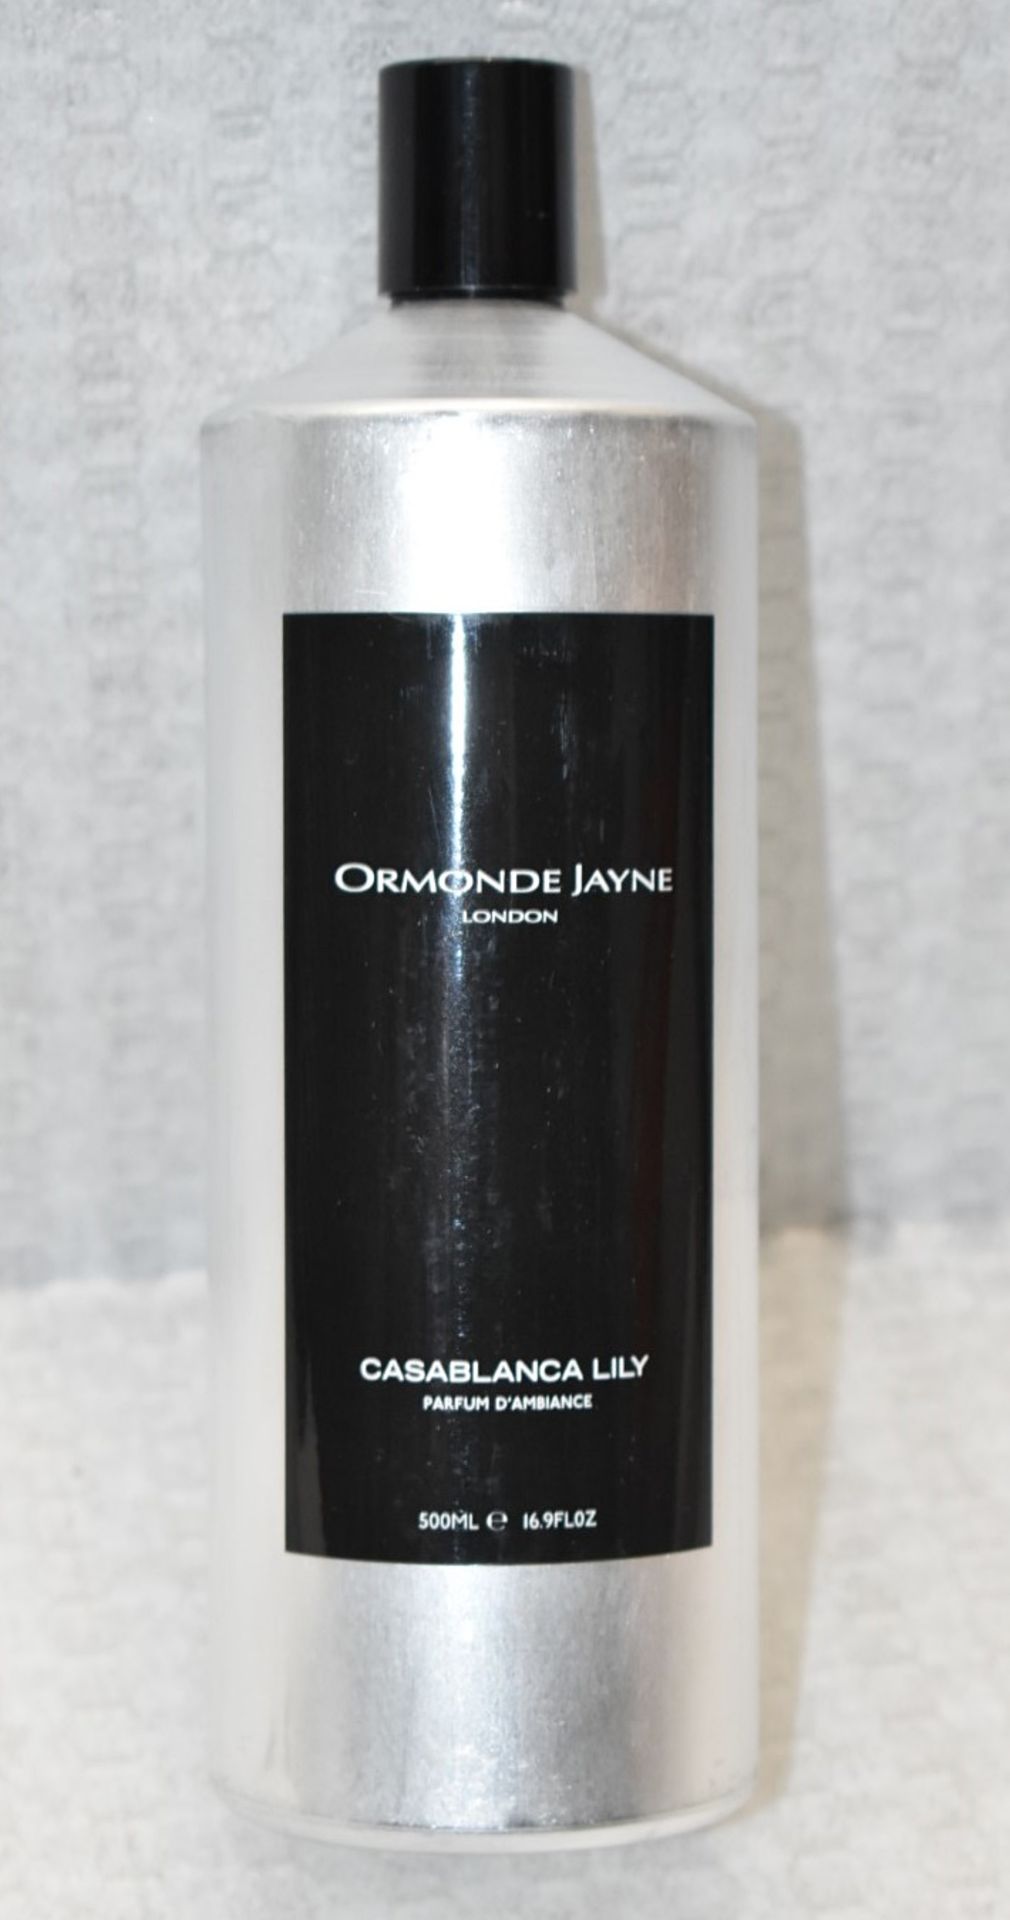 1 x ORMONDE JAYNE 'Casablanca' Diffuser Fragrance Refill, 500ml - Original Price £95.00 - Boxed - Image 3 of 6